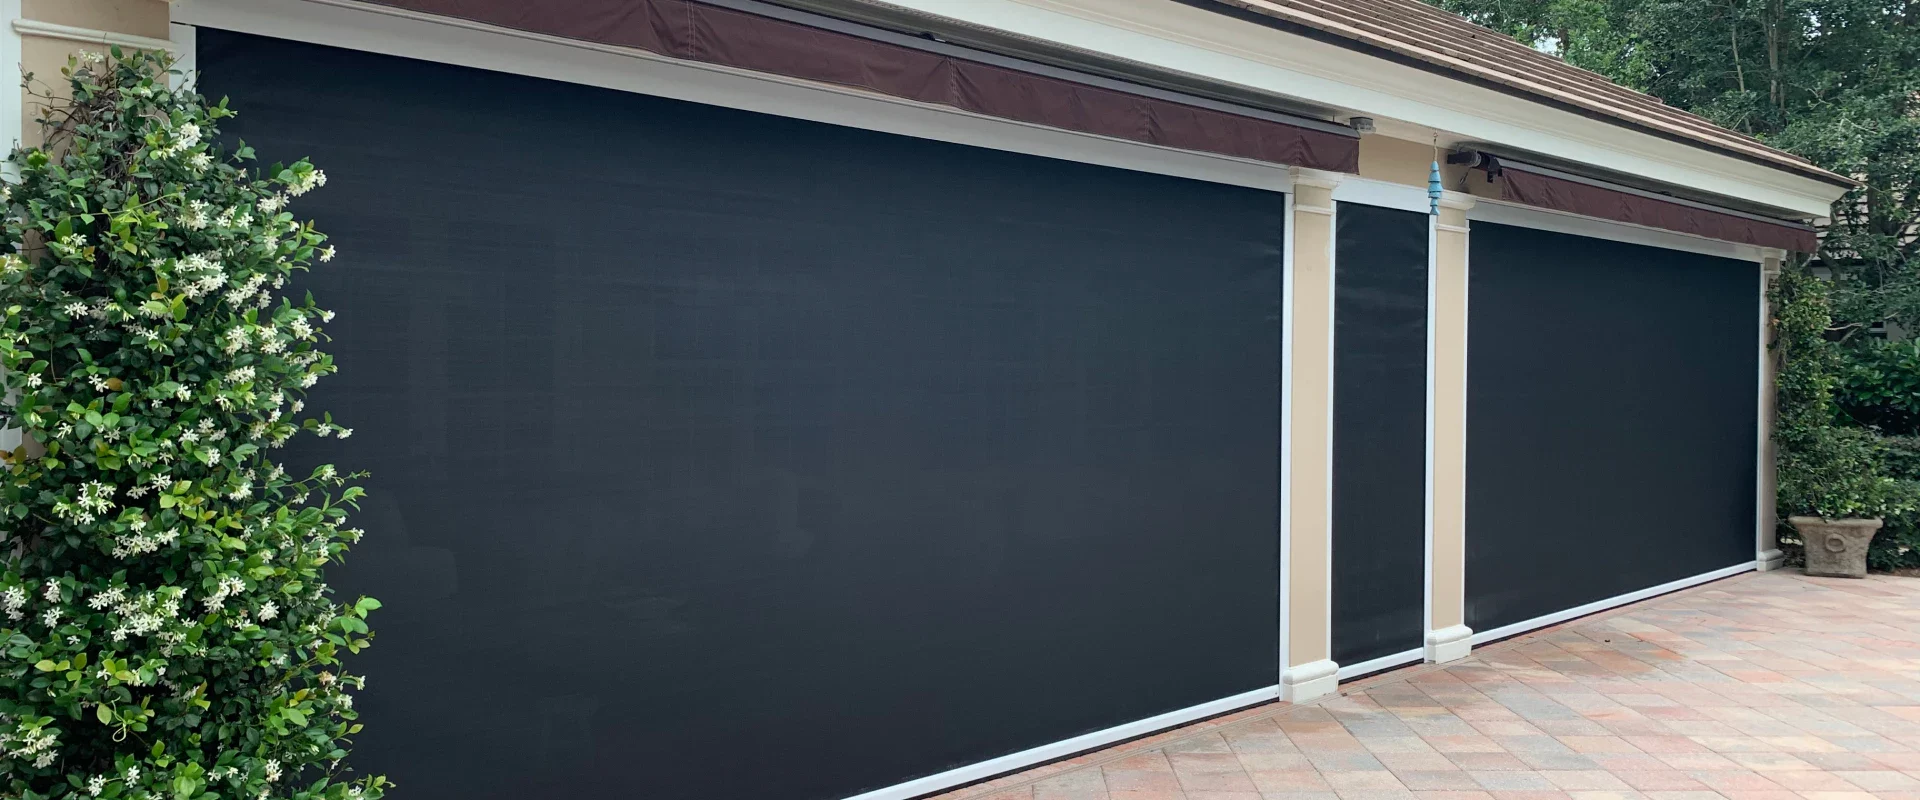 black garage screen newly installed